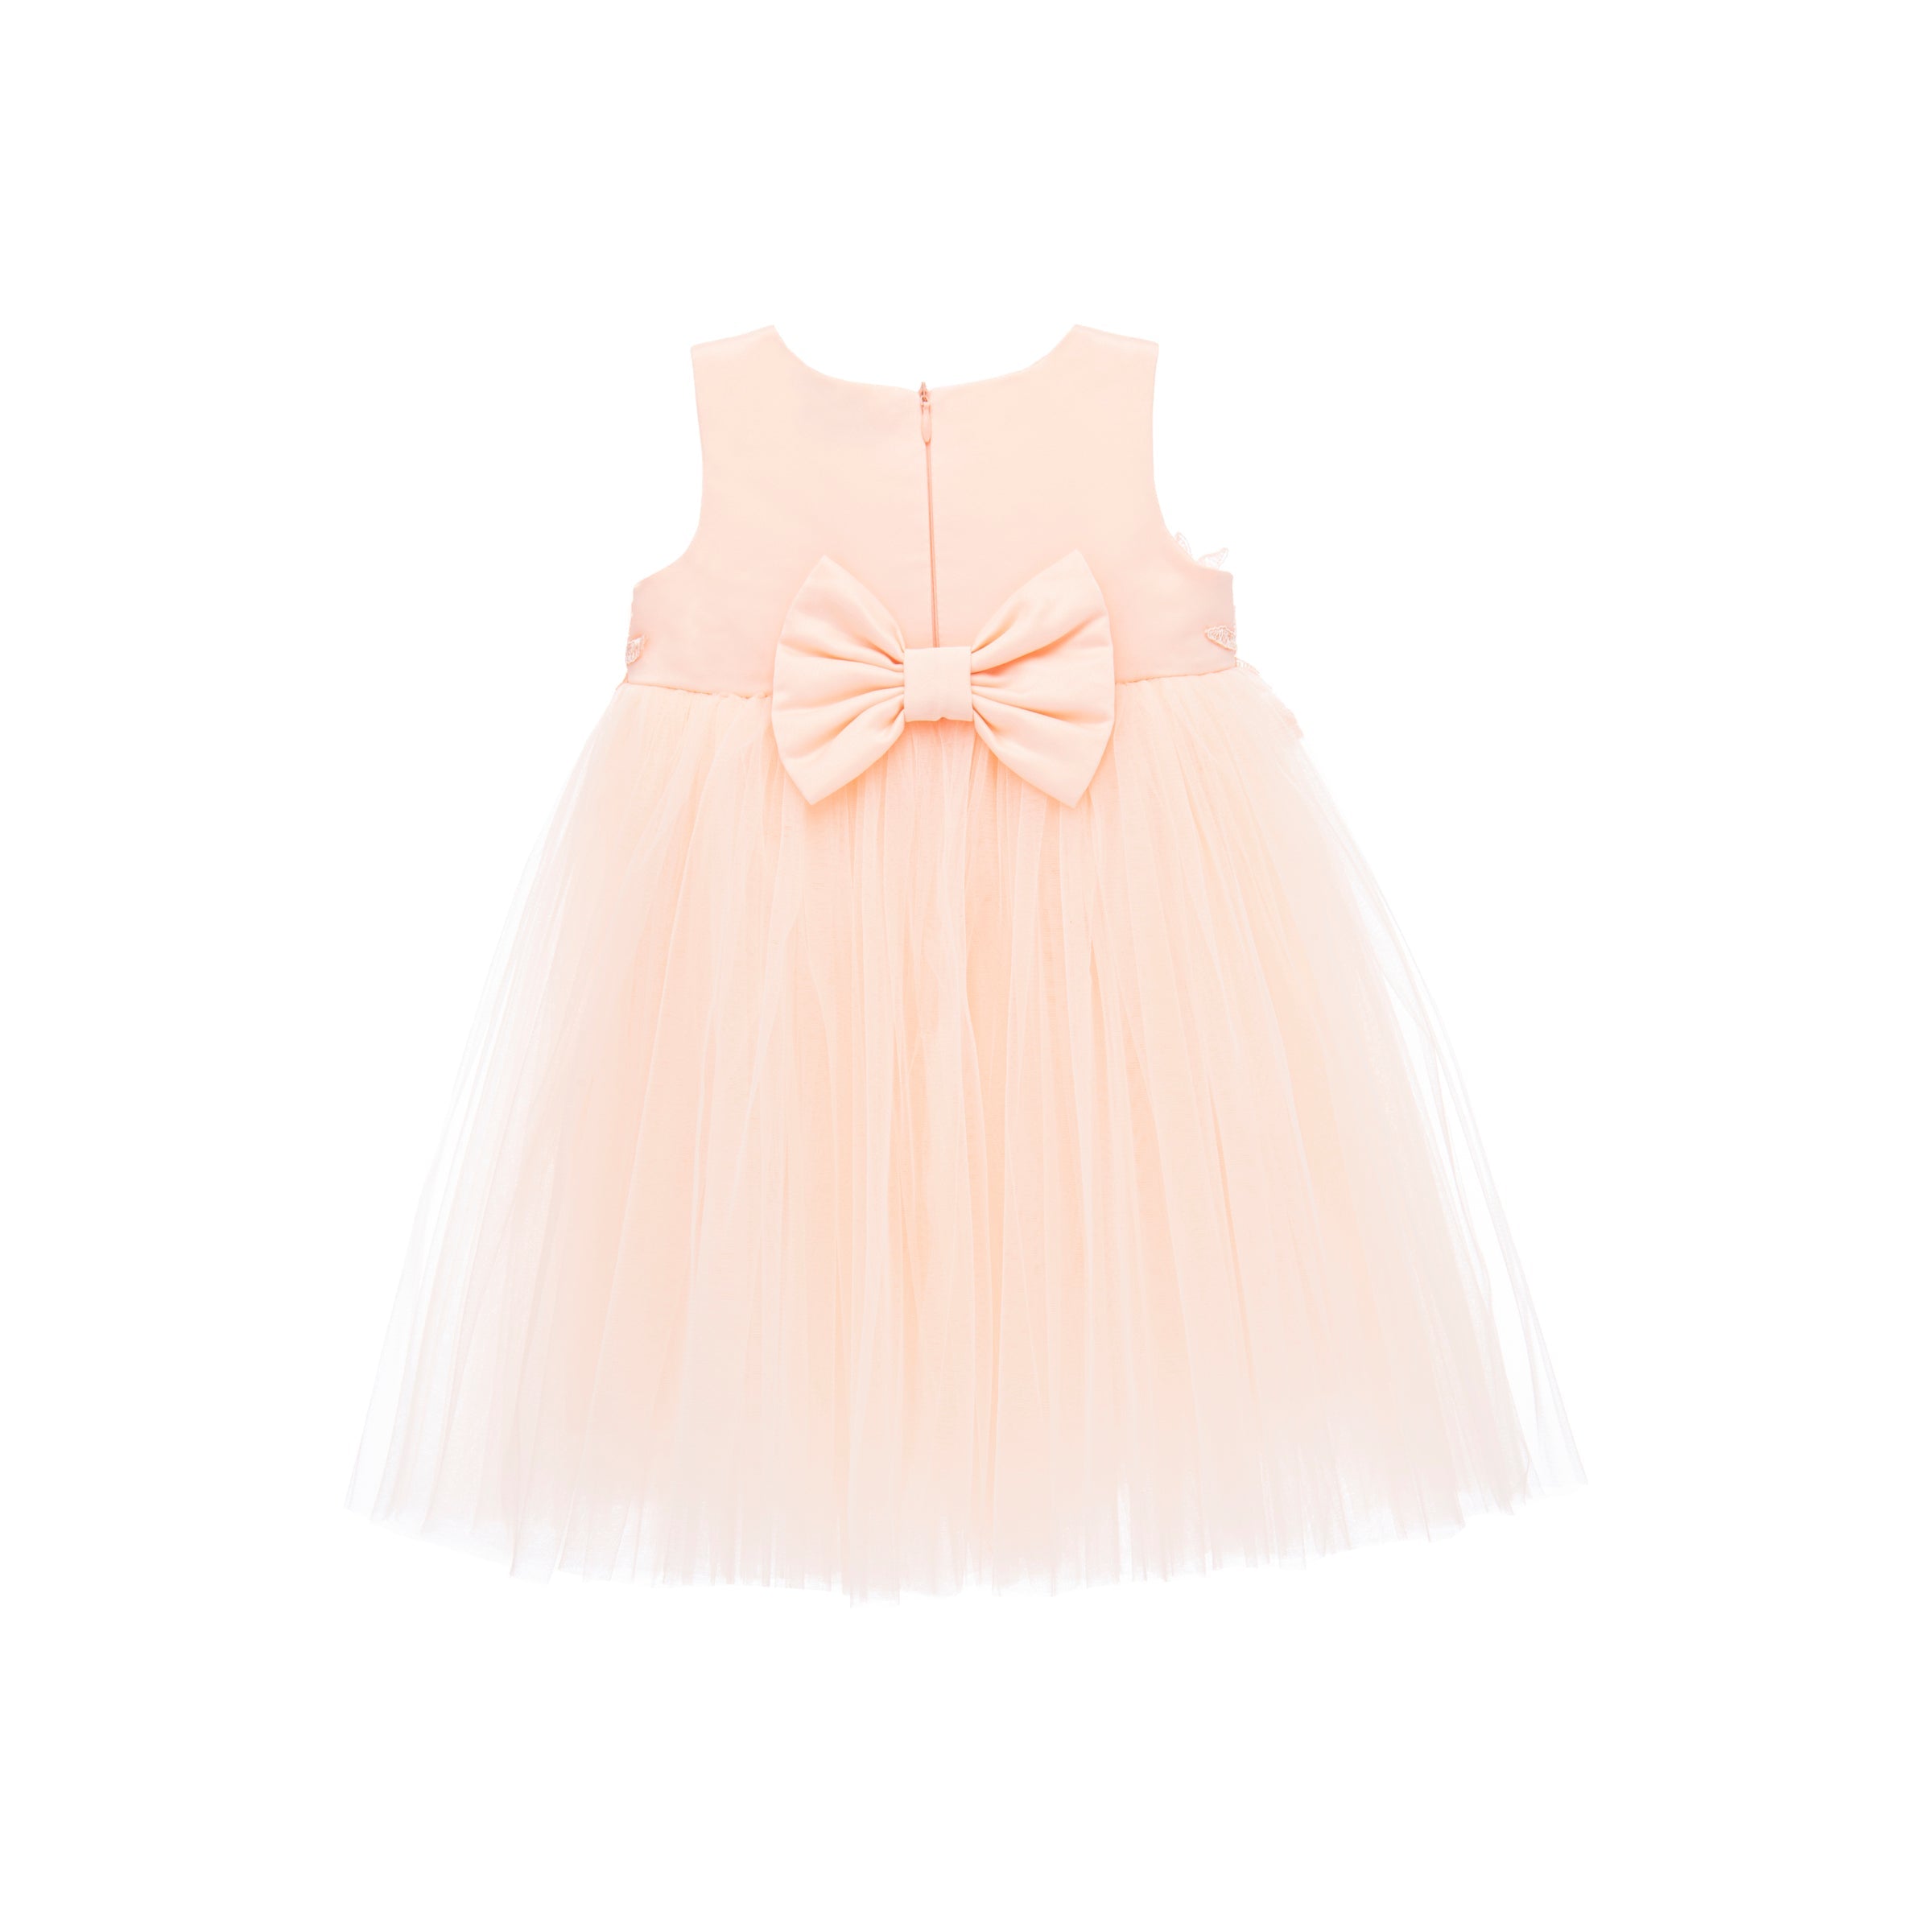 kids-atelier-tulleen-baby-girl-peach-sleeveless-floral-tulle-dress-ss19601-salmon